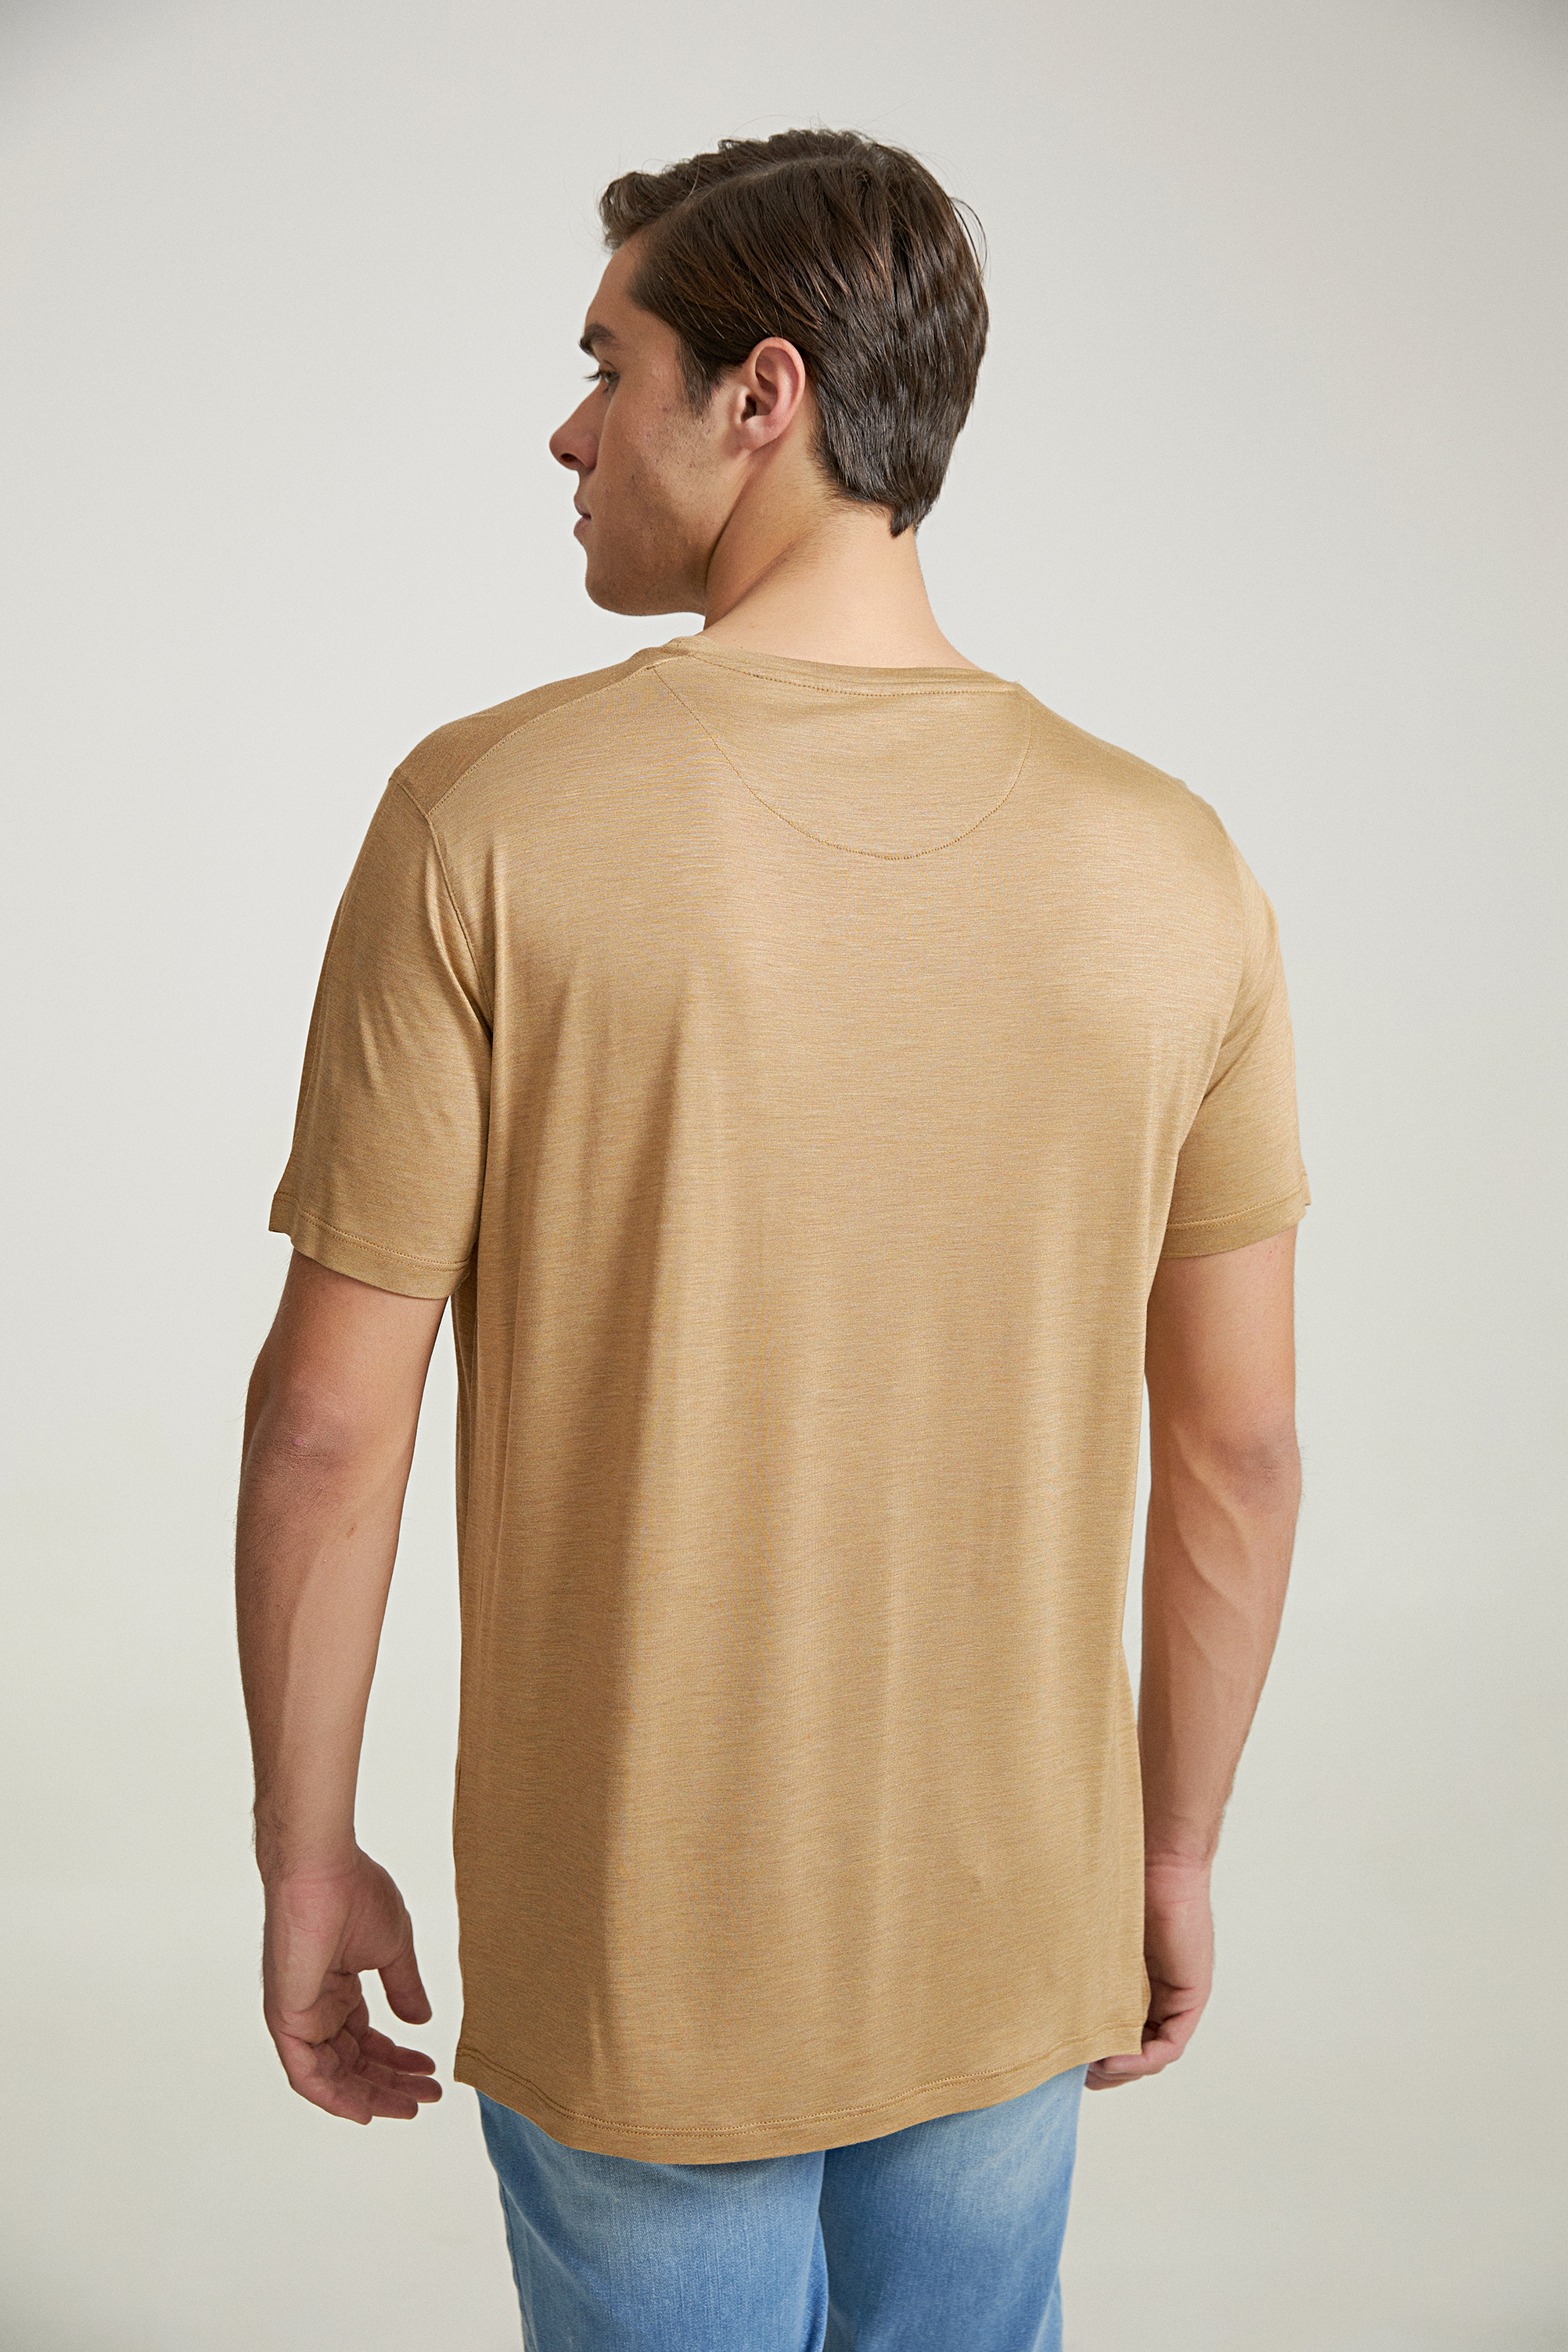 Damat Tween Damat Camel T-Shirt. 4